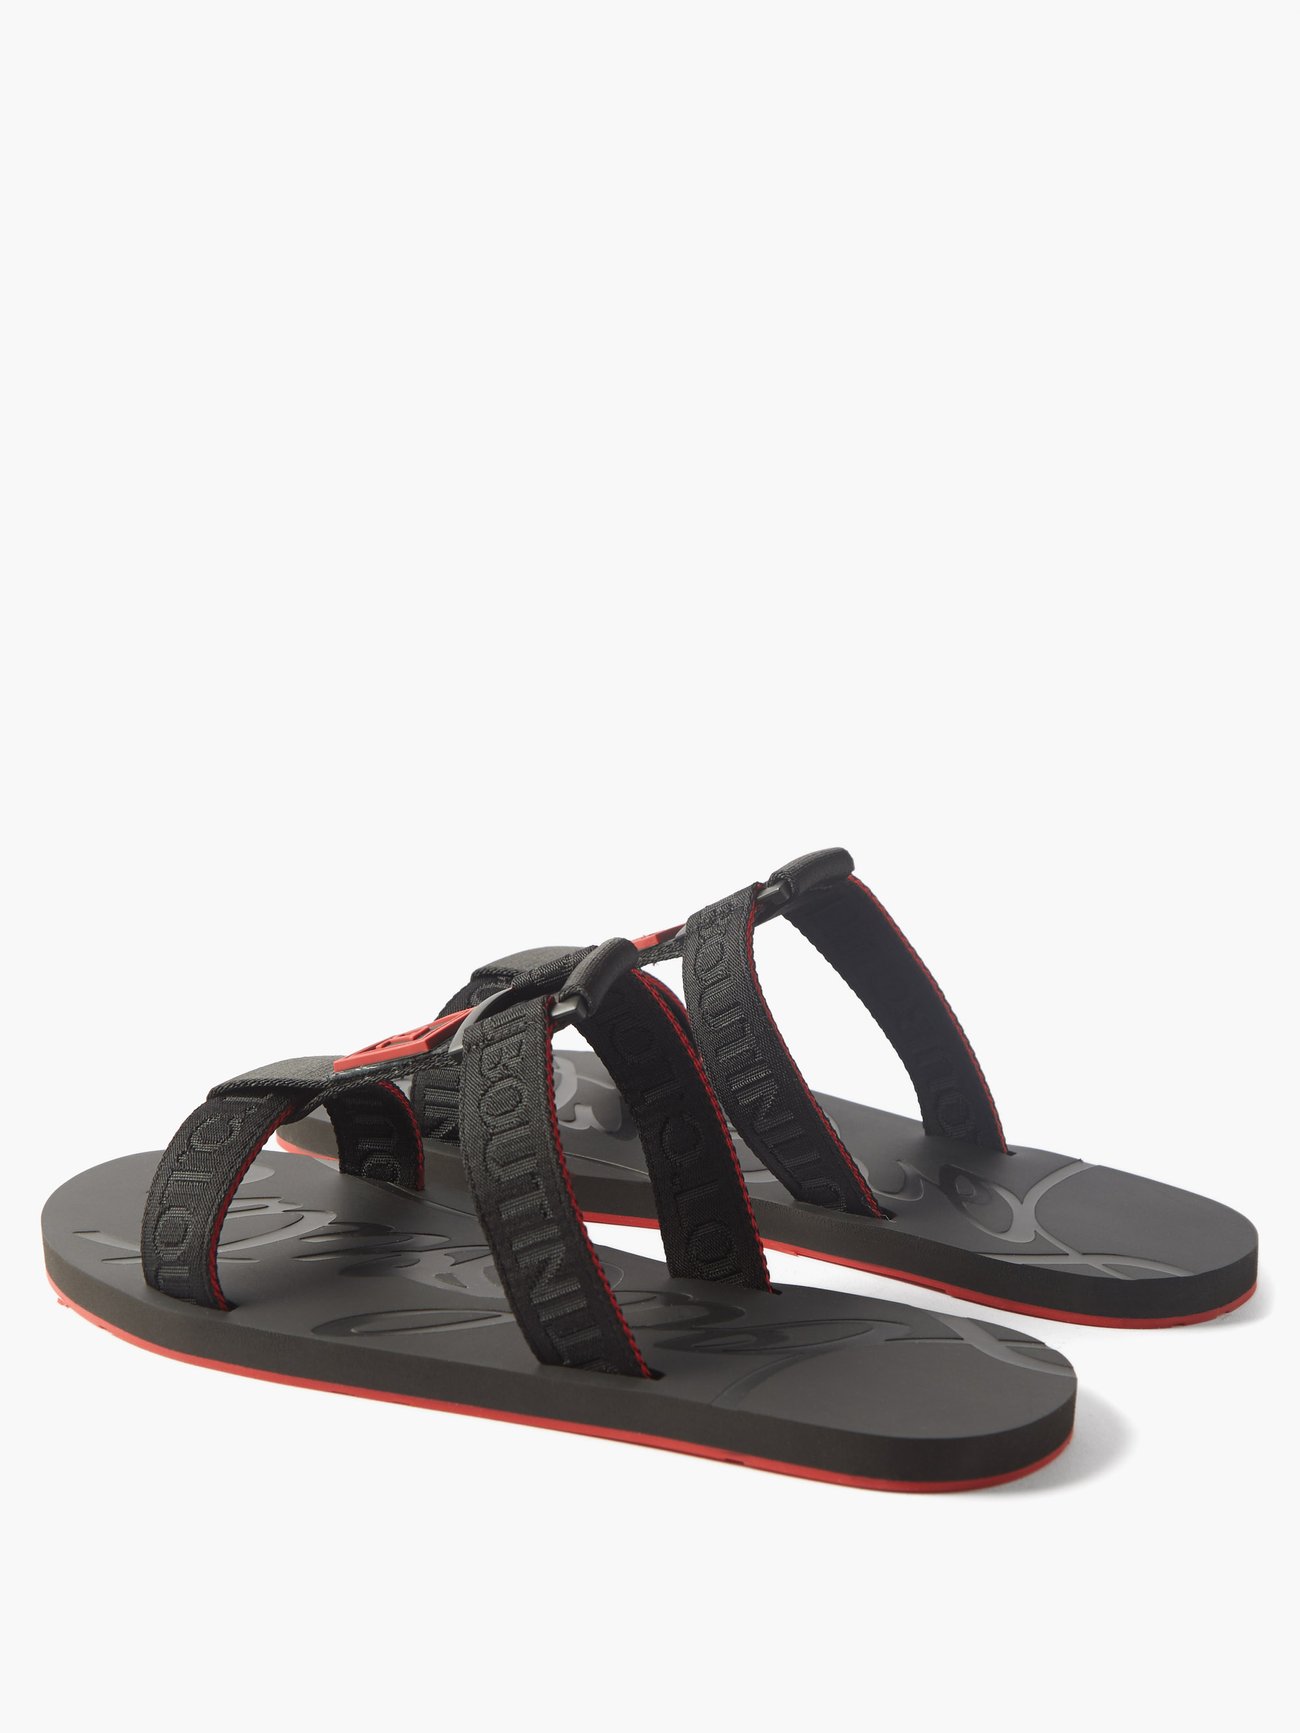 Christian Louboutin Men's Surf Black Leather Sandals